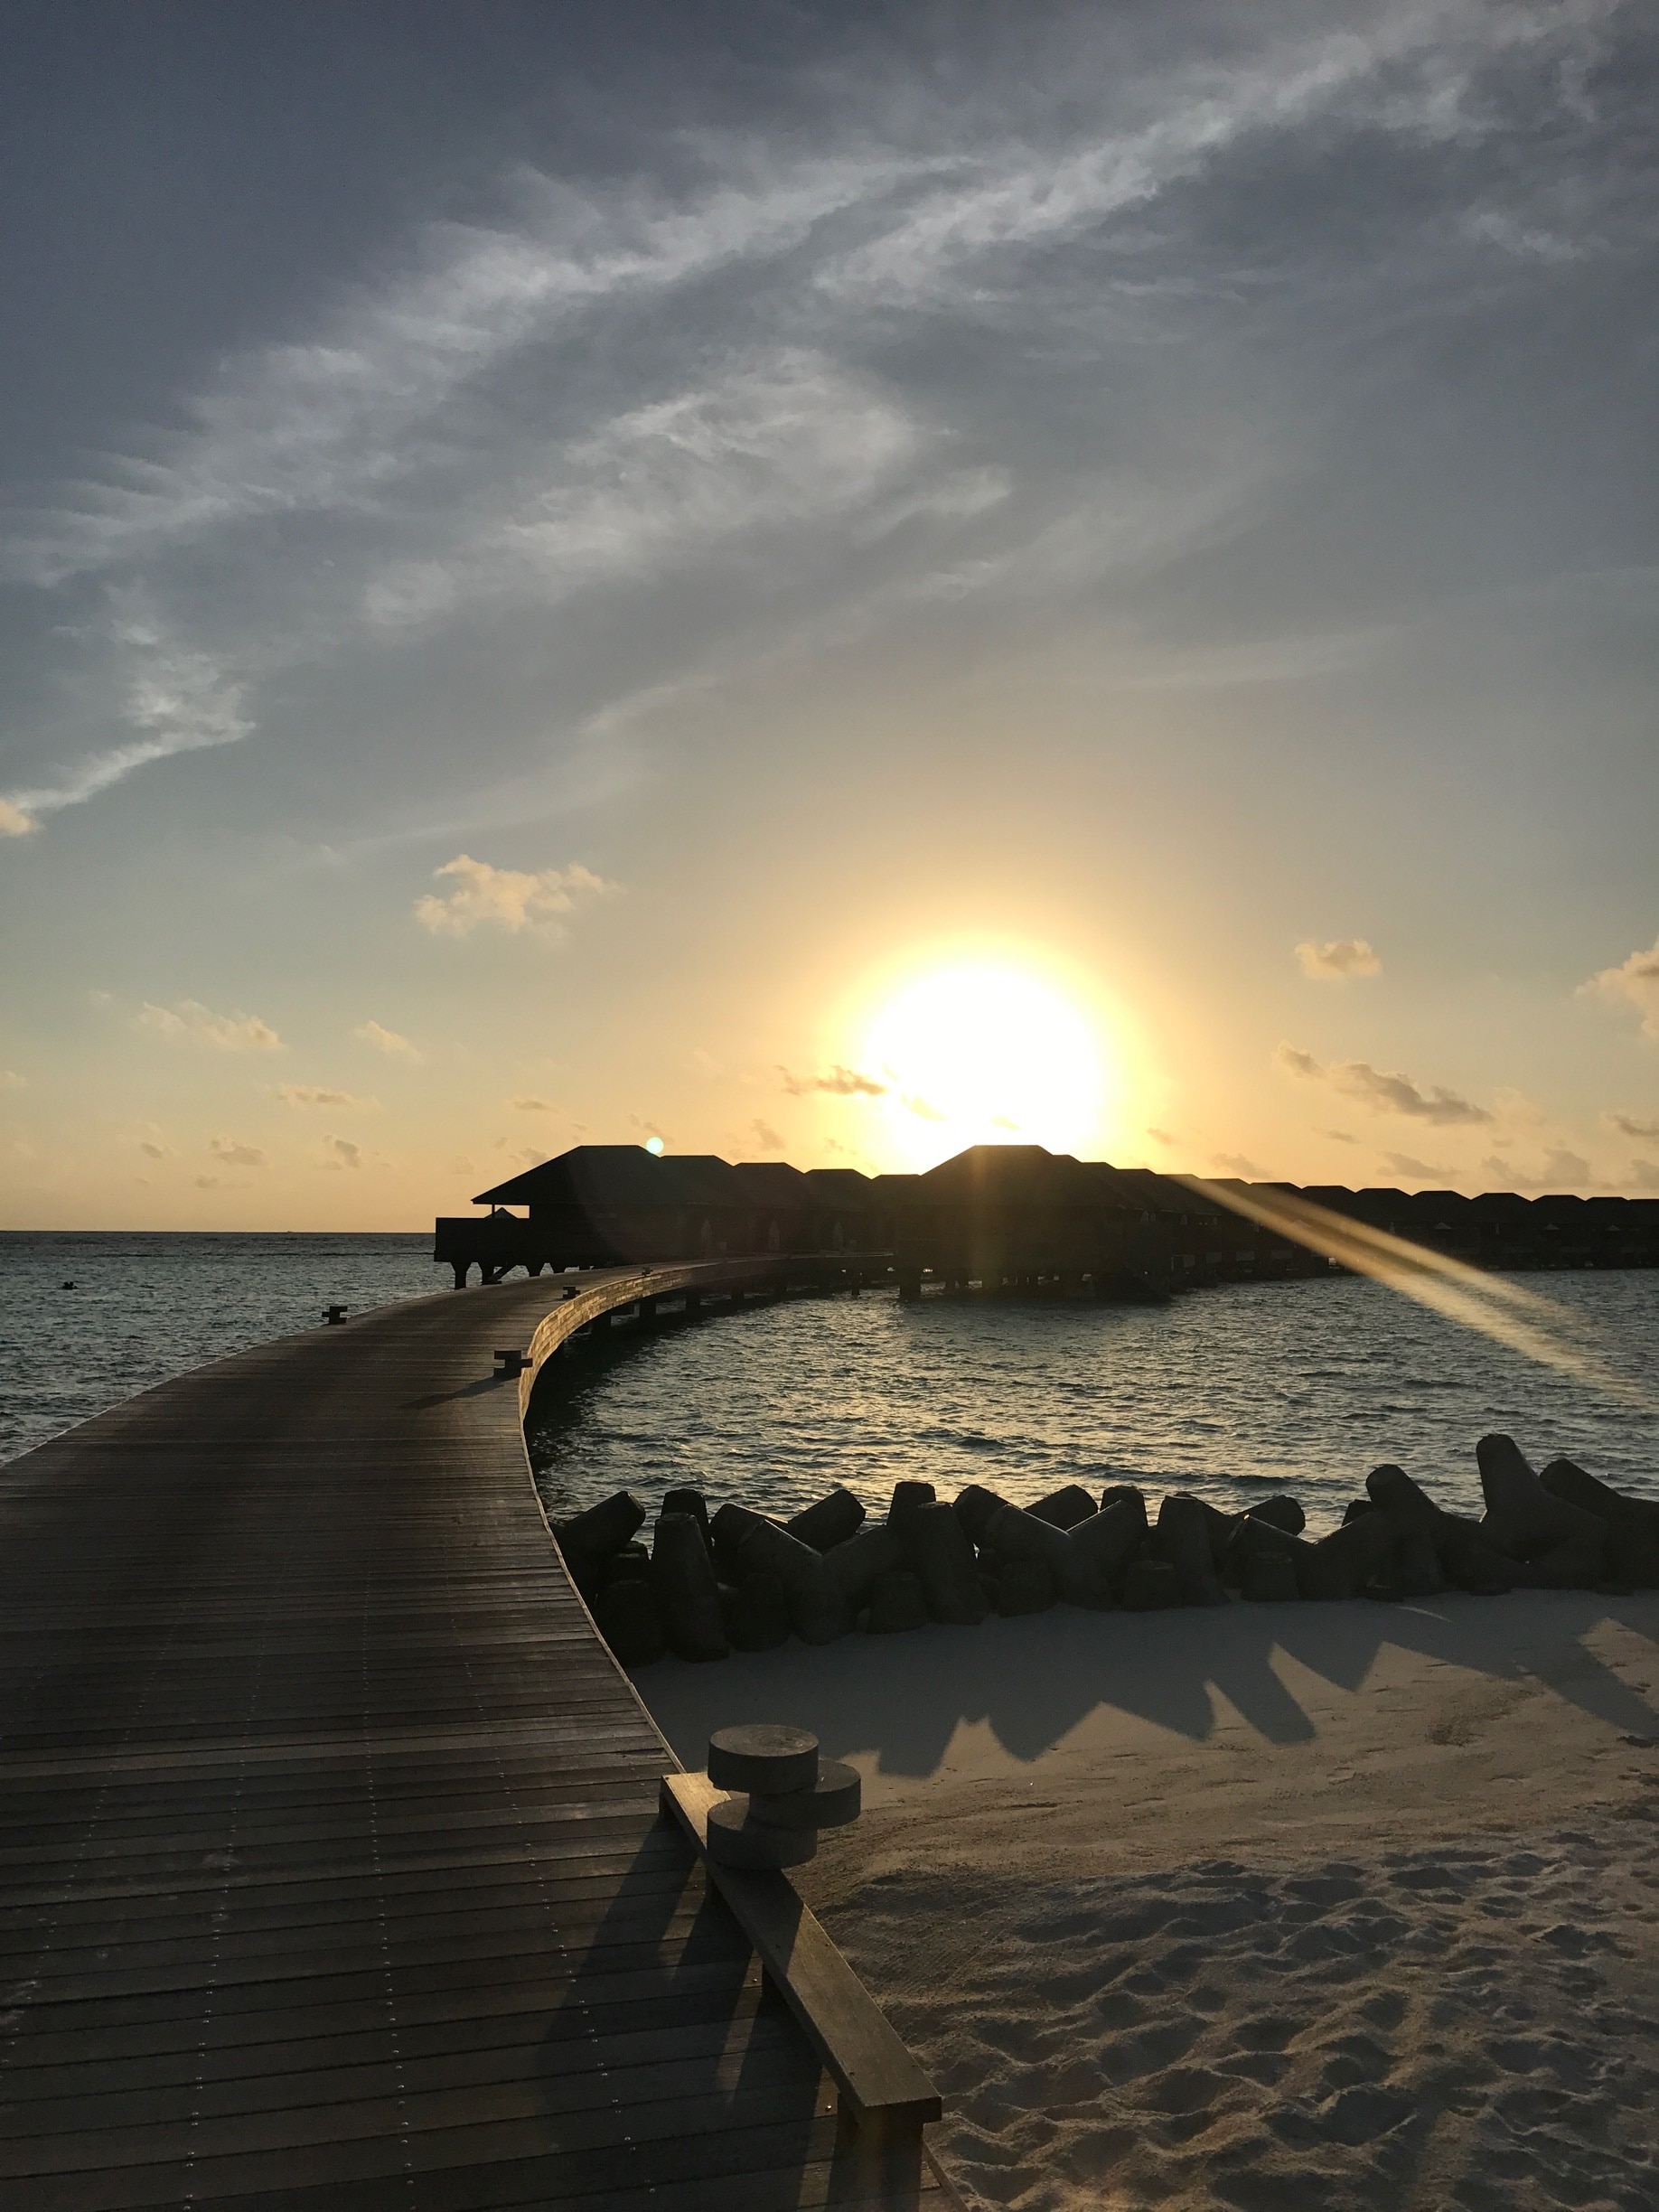 Maldives sunset...no words needed. #lifeatexpedia